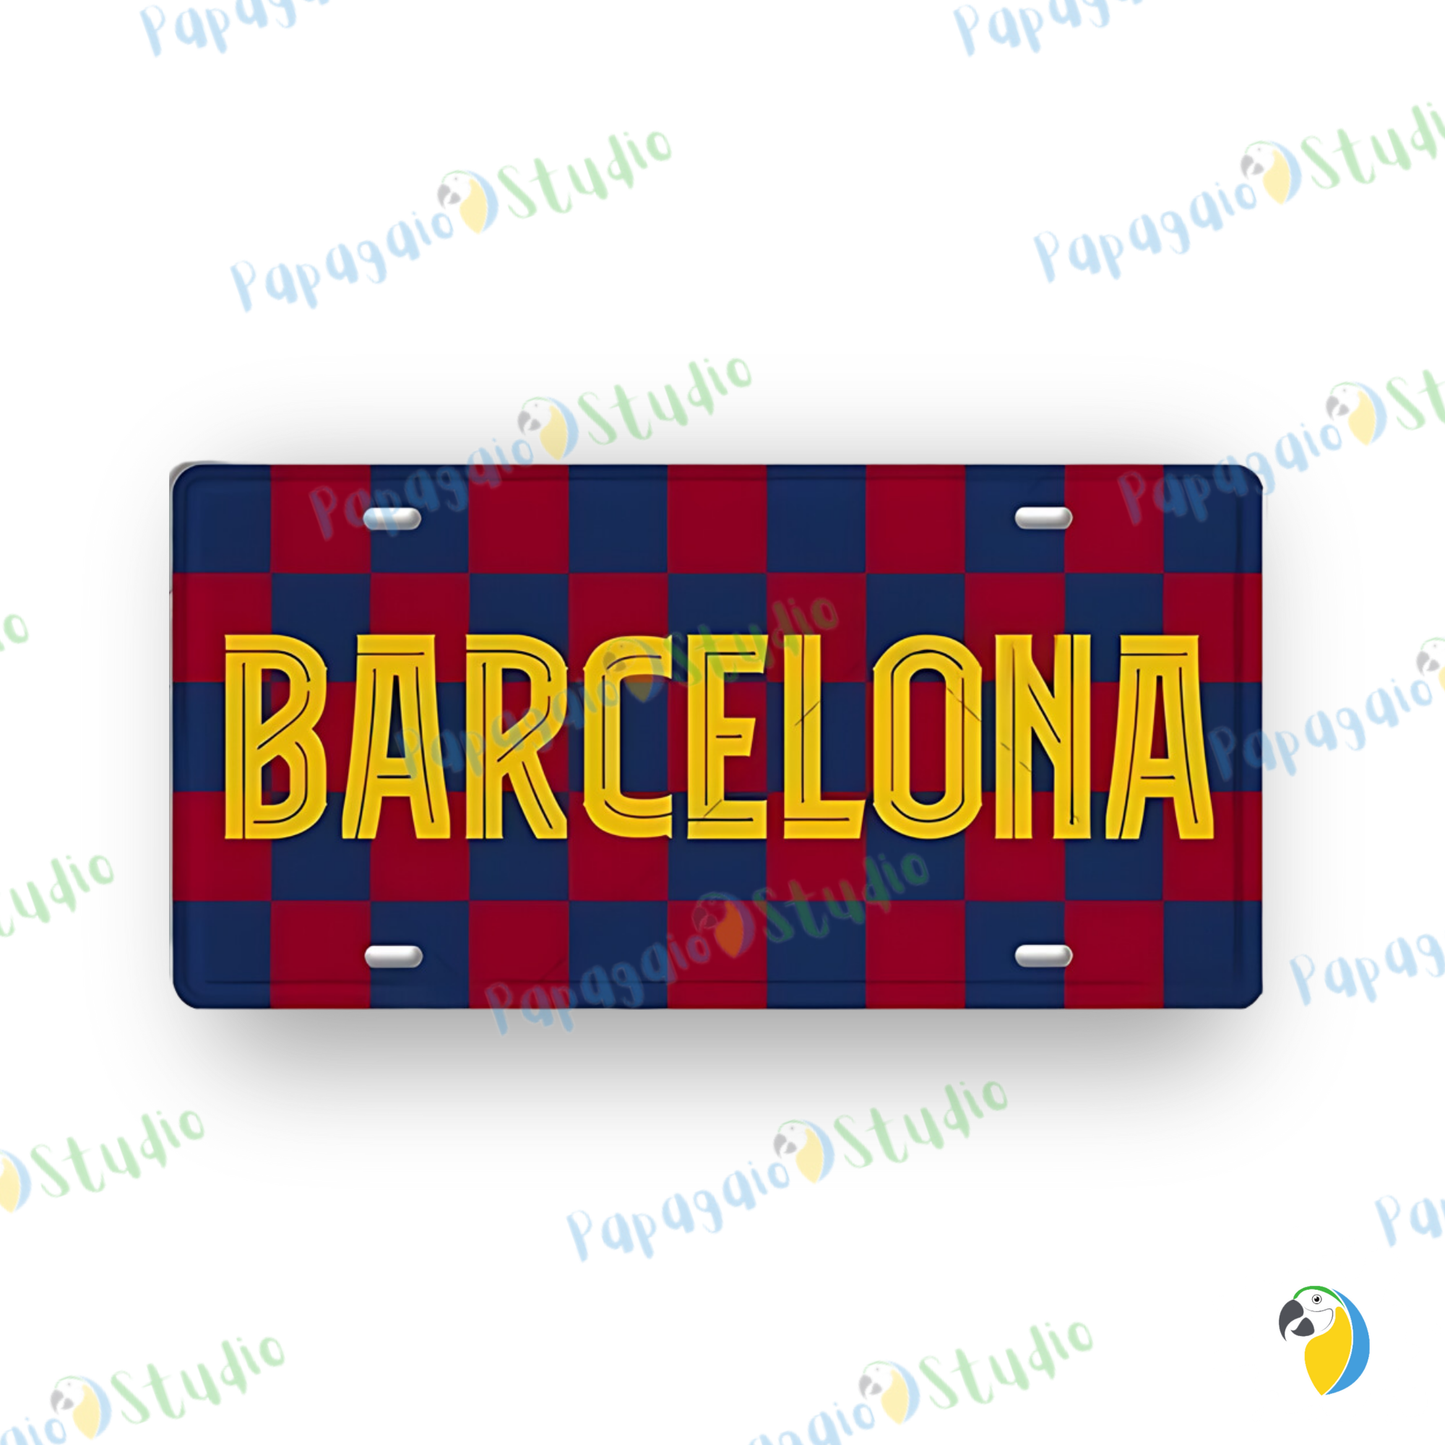 Football Jersey License Plate • Milan Barcelona Madrid Munich Manchester City Colors 15x30cm Tin Sign • Soccer Team Metal Print Wall Hanging • Papagaio Studio Design Shop